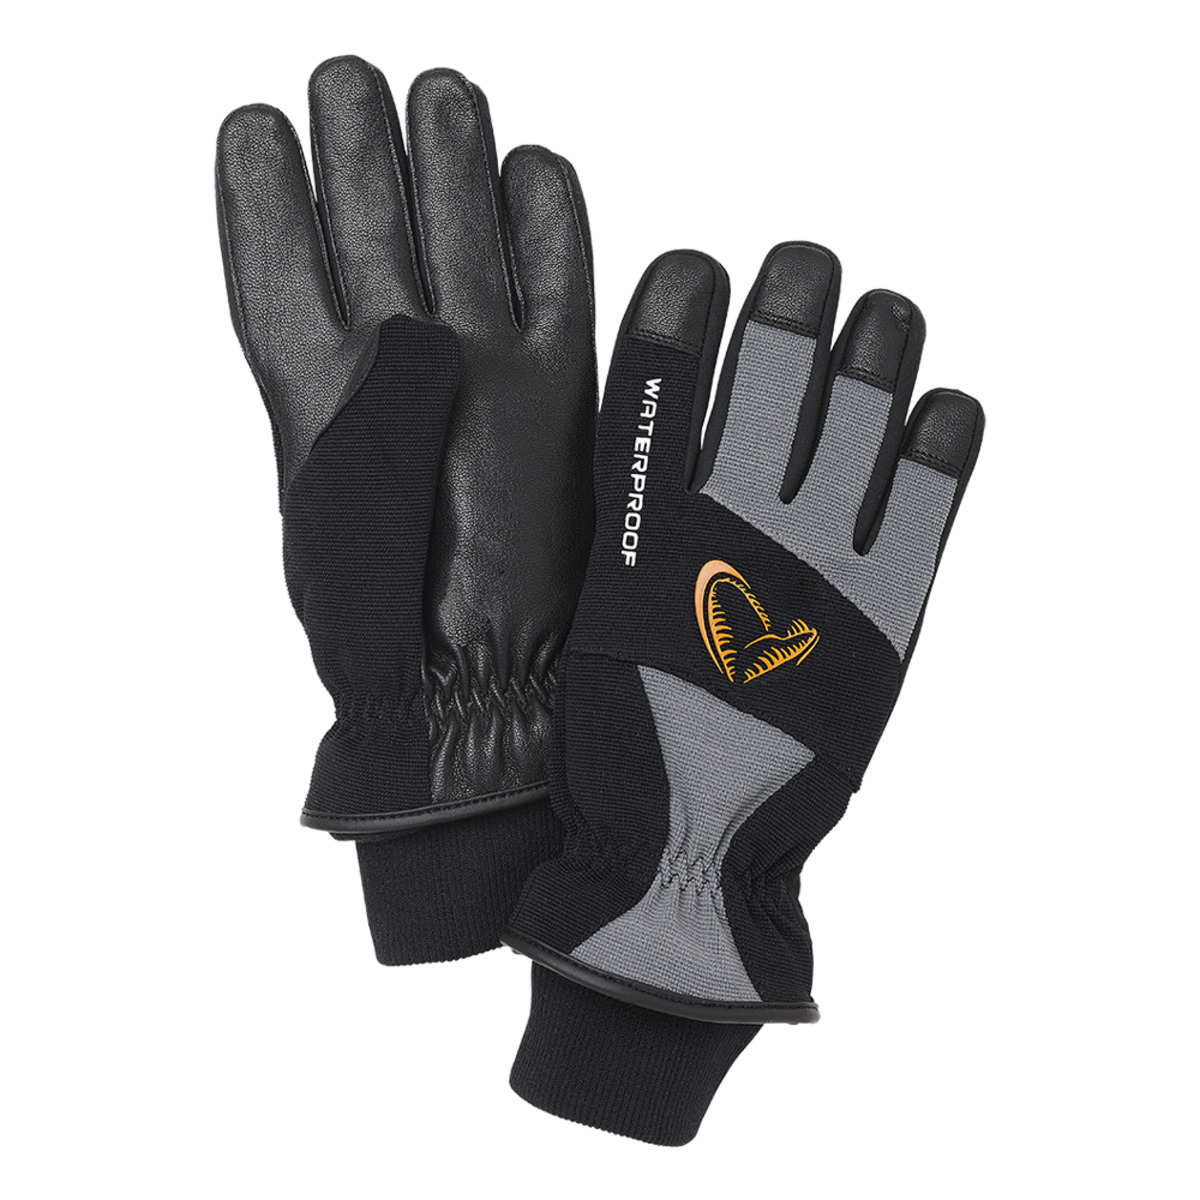 Savage Gear Thermo Pro Glove - M GREY/BLACK